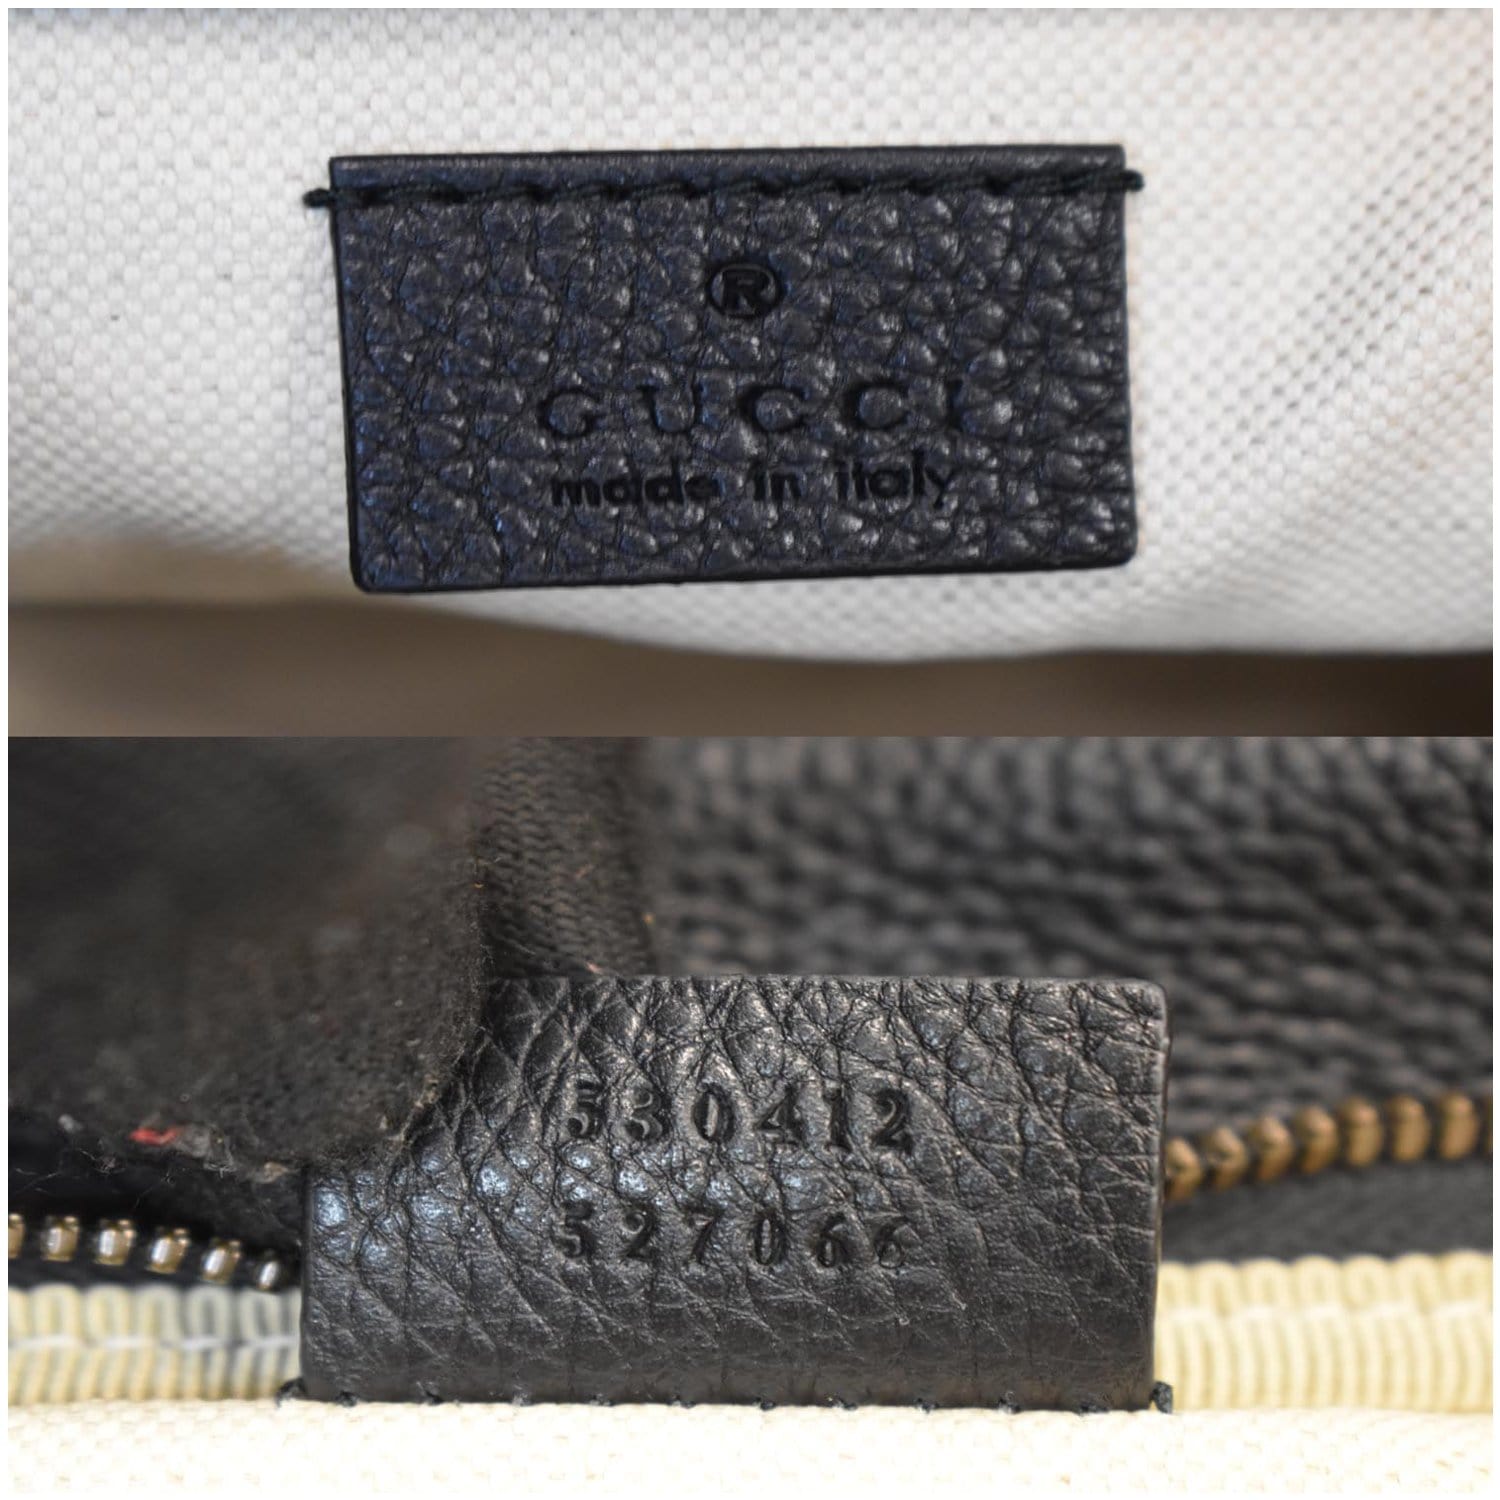 Gucci Logo Belt Bag Printed Leather Medium Red 2177781